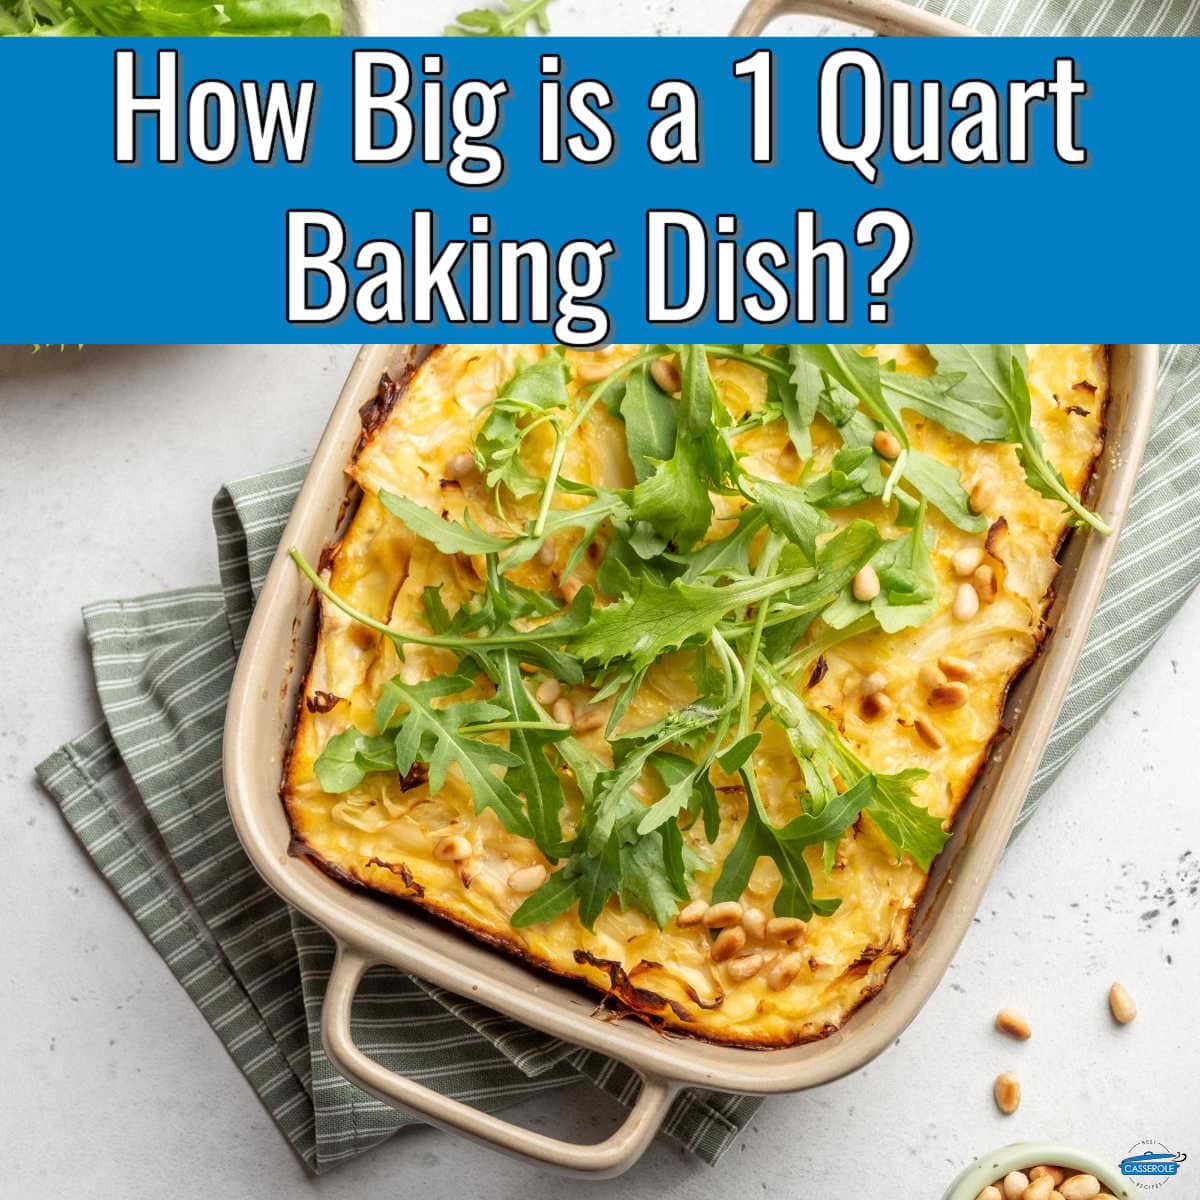 https://bestcasserolerecipes.com/wp-content/uploads/2022/10/How-big-is-a-1-quart-baking-dish_-Featured-Image.jpg